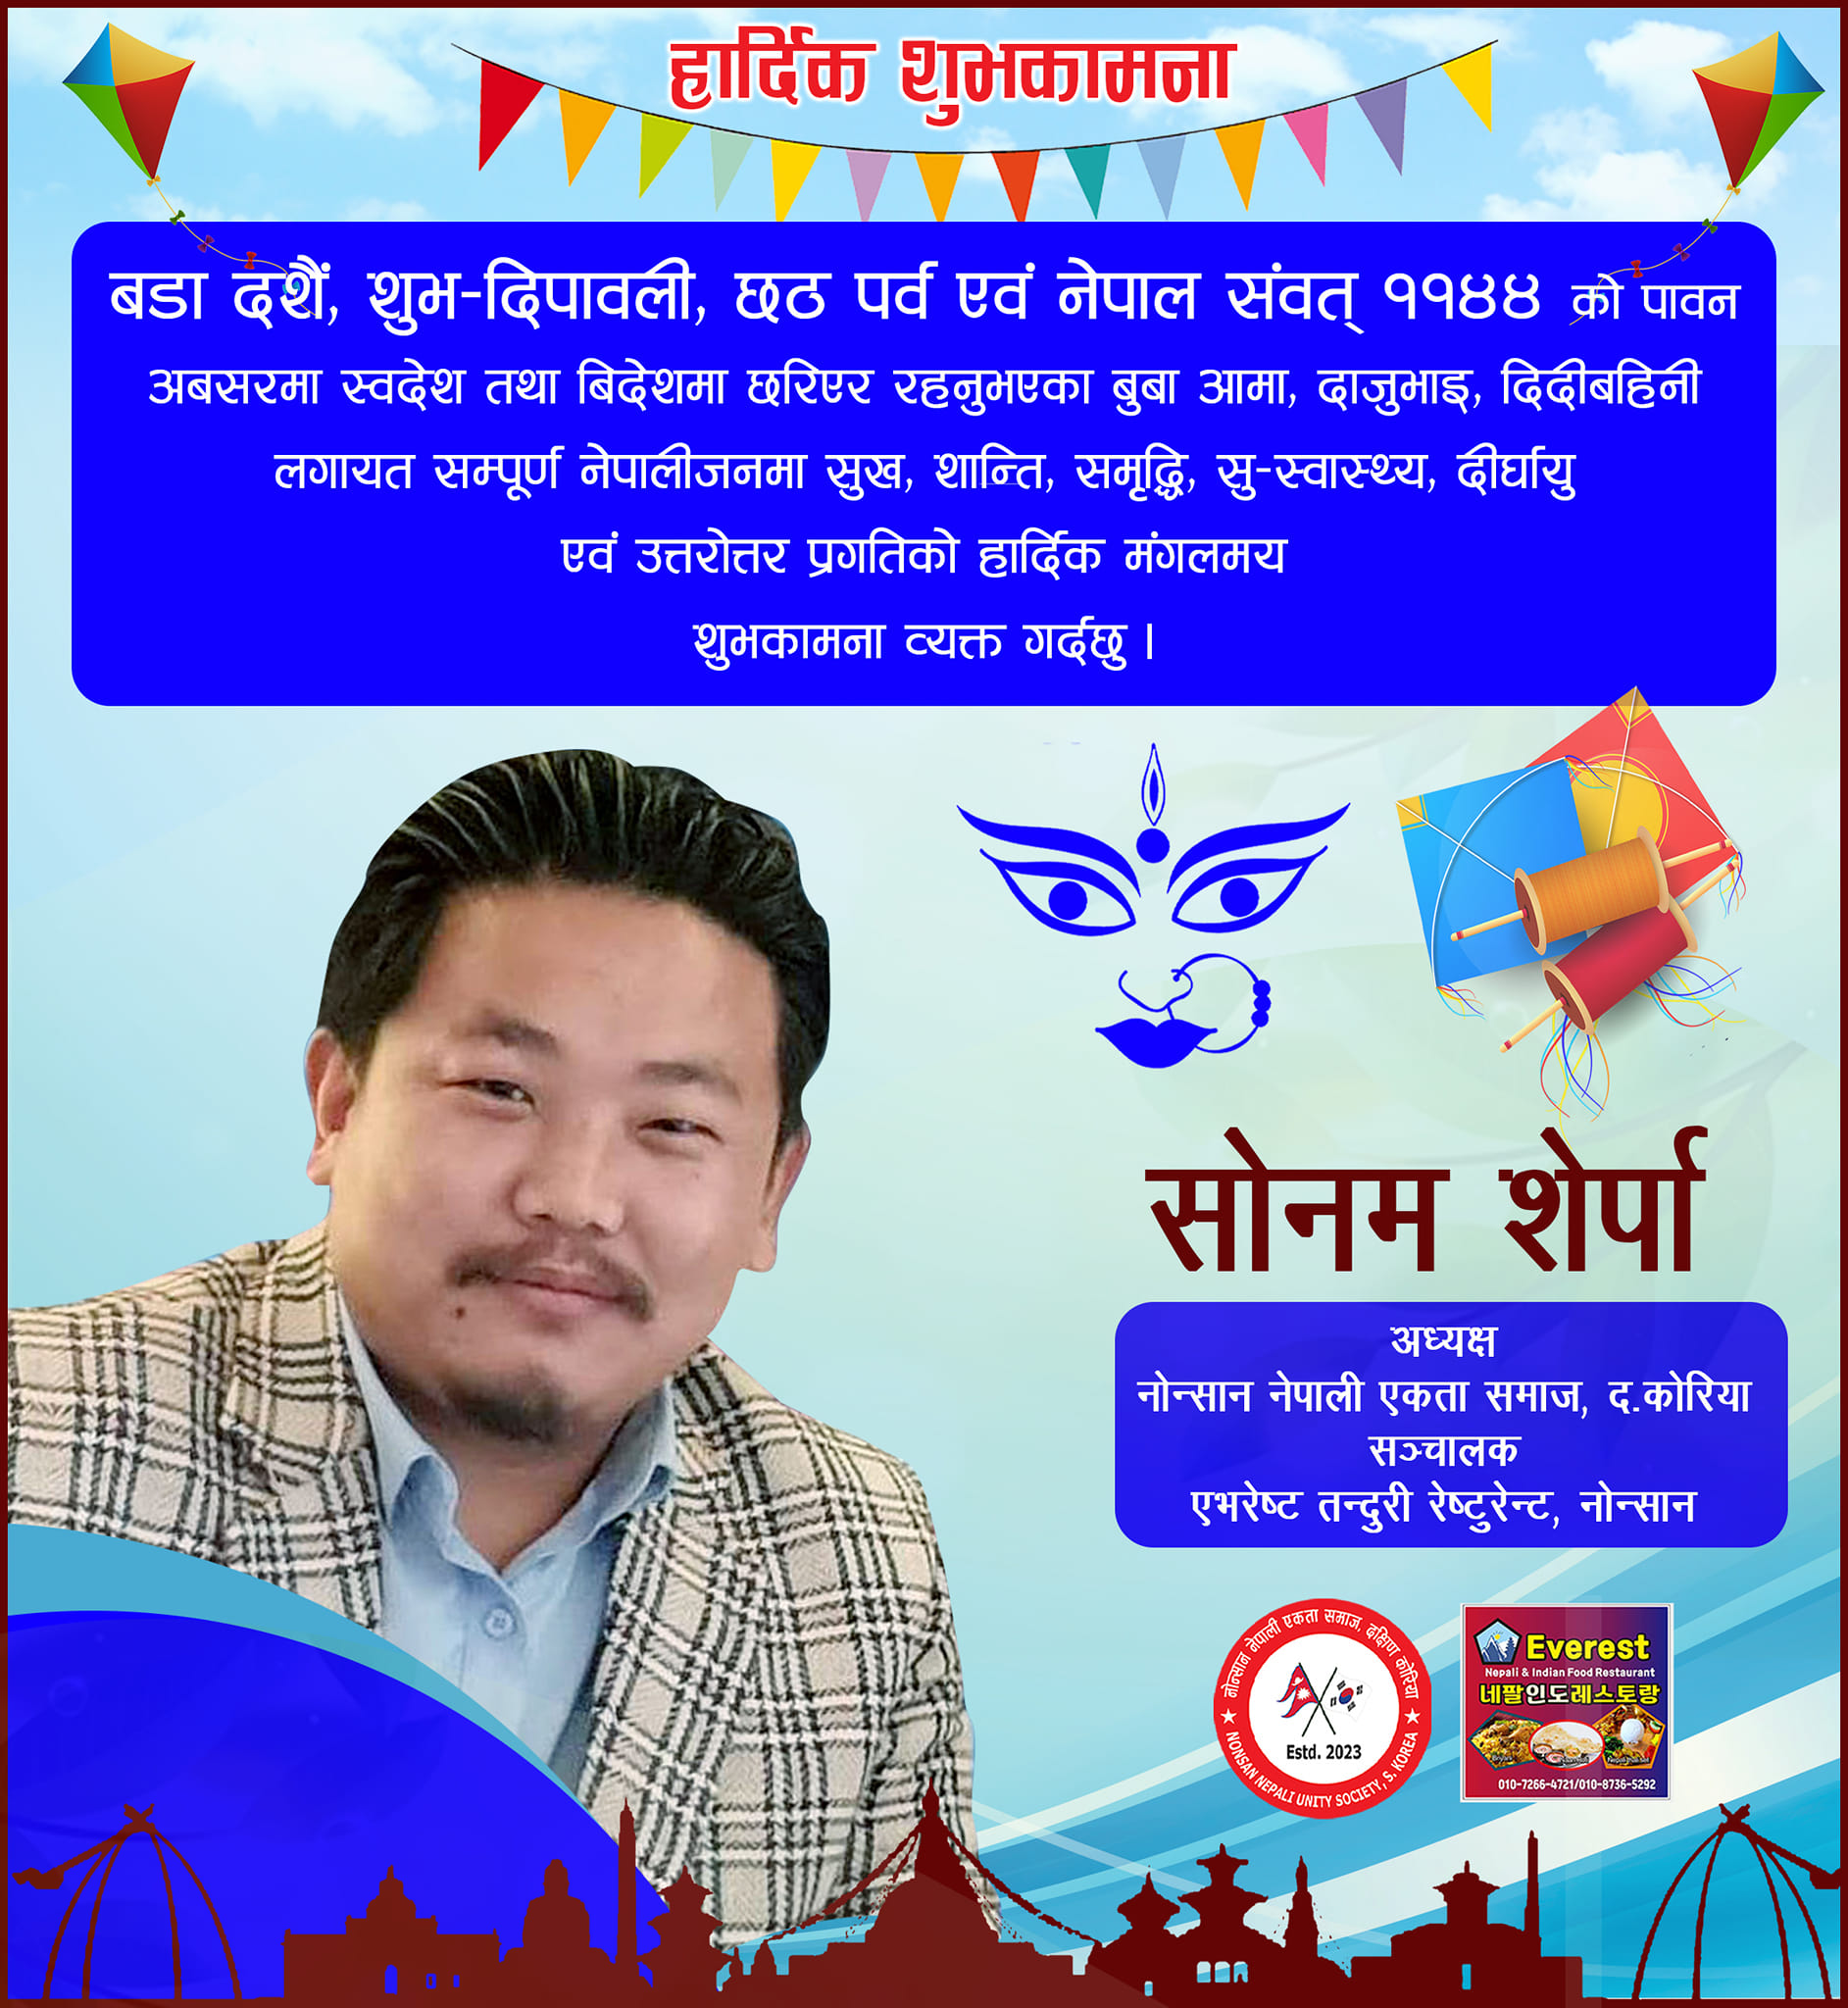 नोन्सान नेपाली एकता समाज, दक्षिण कोरियाका अध्यक्ष श्री सोनम शेर्पाज्यूद्वारा विजया दशमीको शुभकामना